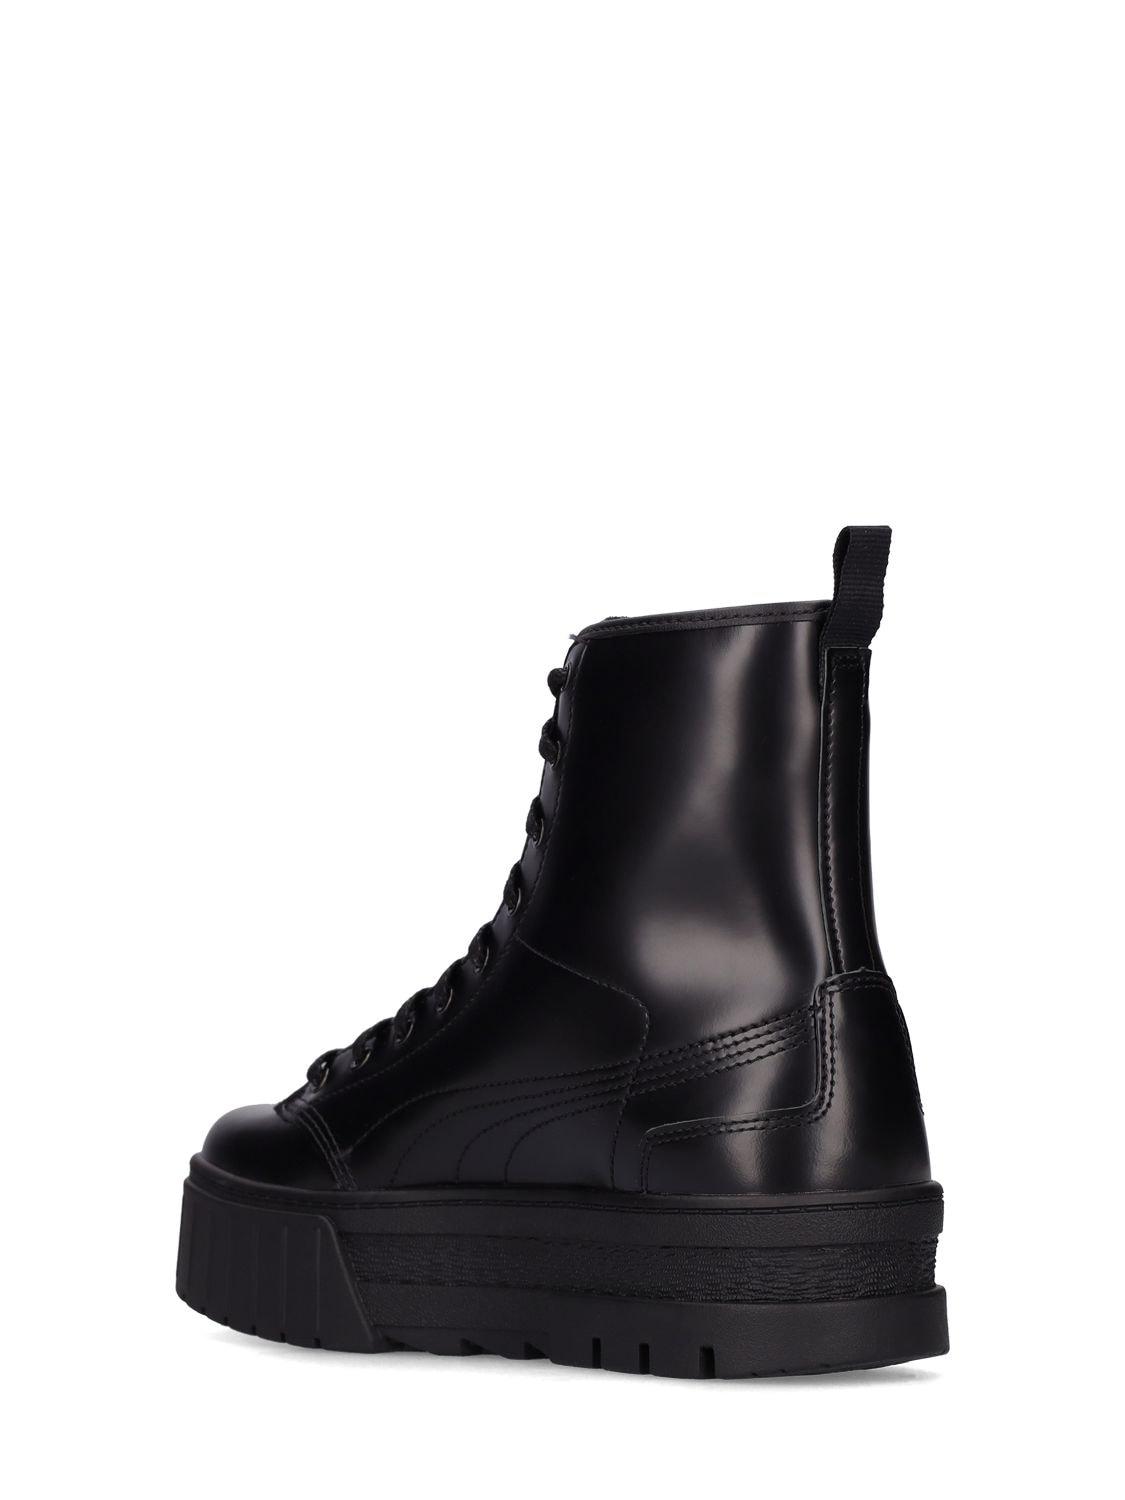 PUMA X Dua Lipa Leather Boots in Black | Lyst